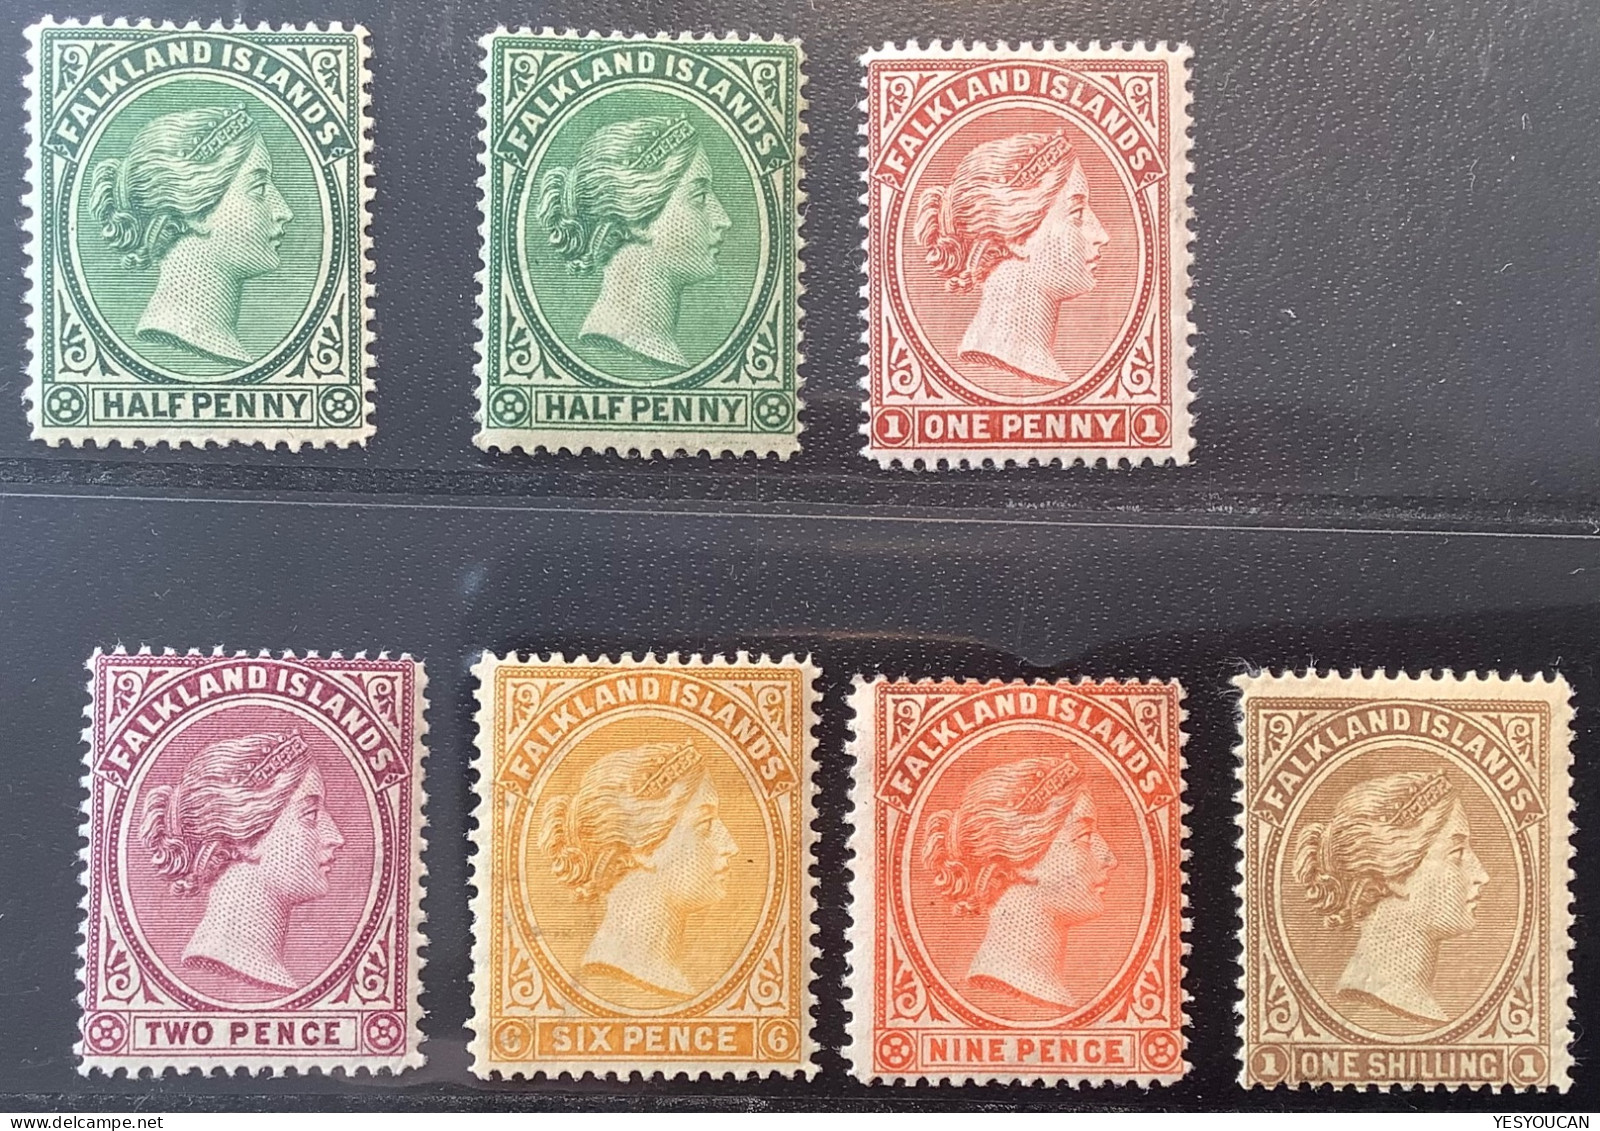 Falkland Islands 1891-1902 Queen Victoria 7 Different F-VF Mint Original Gum  (MH*) Stamps (Iles Falkland British Empire - Falkland Islands